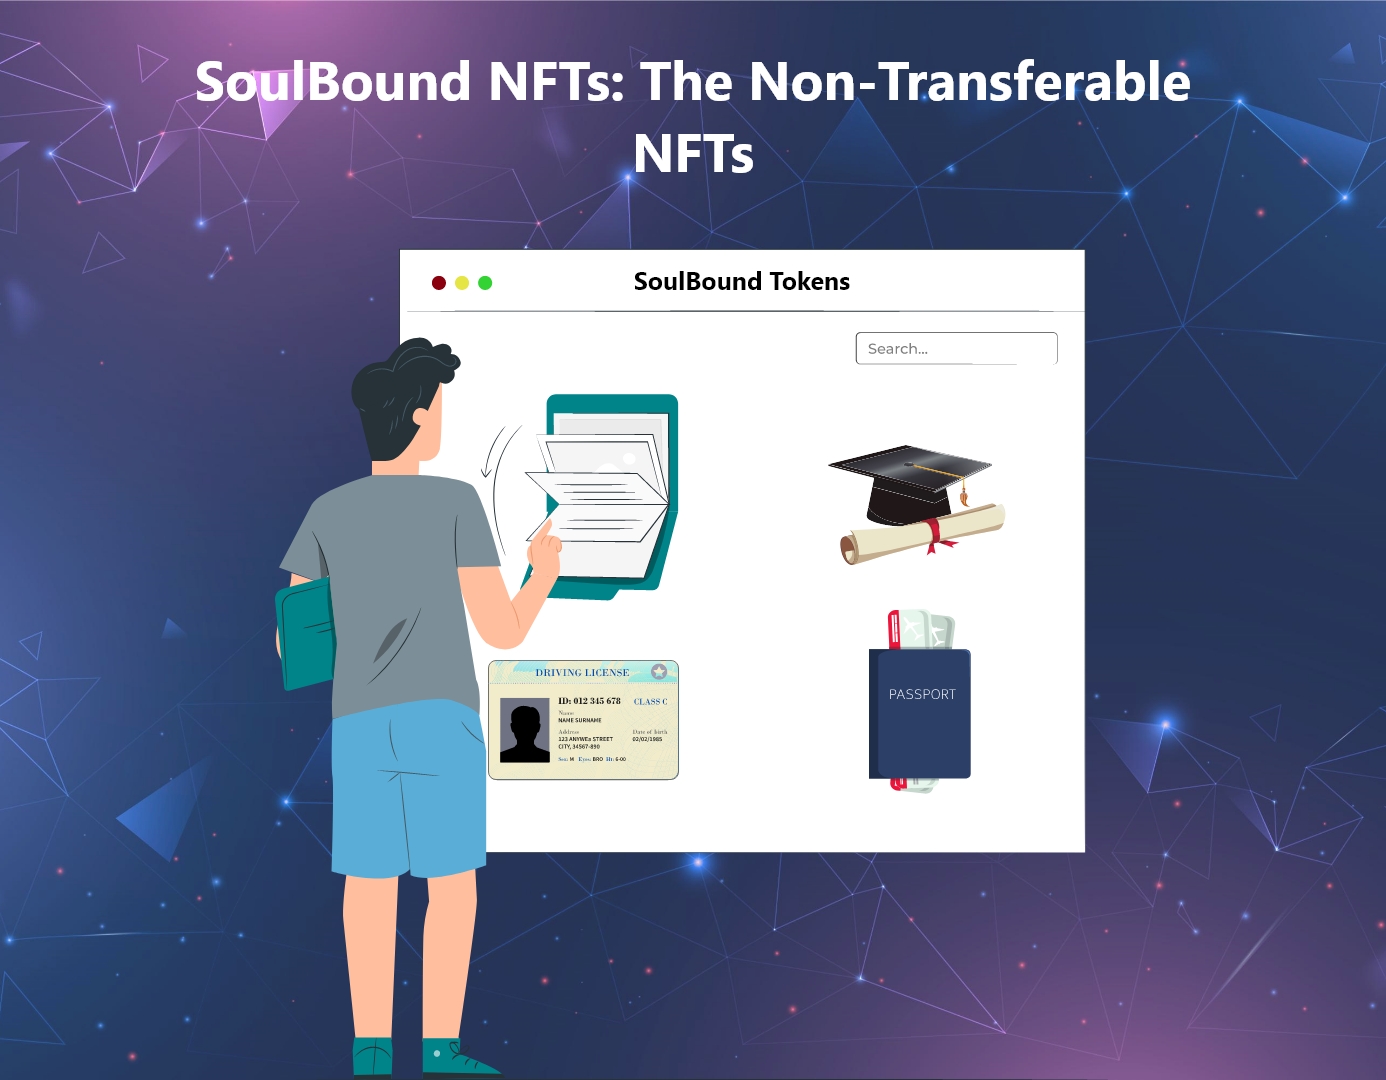 SoulBound NFTs: The Non-Transferable NFTs